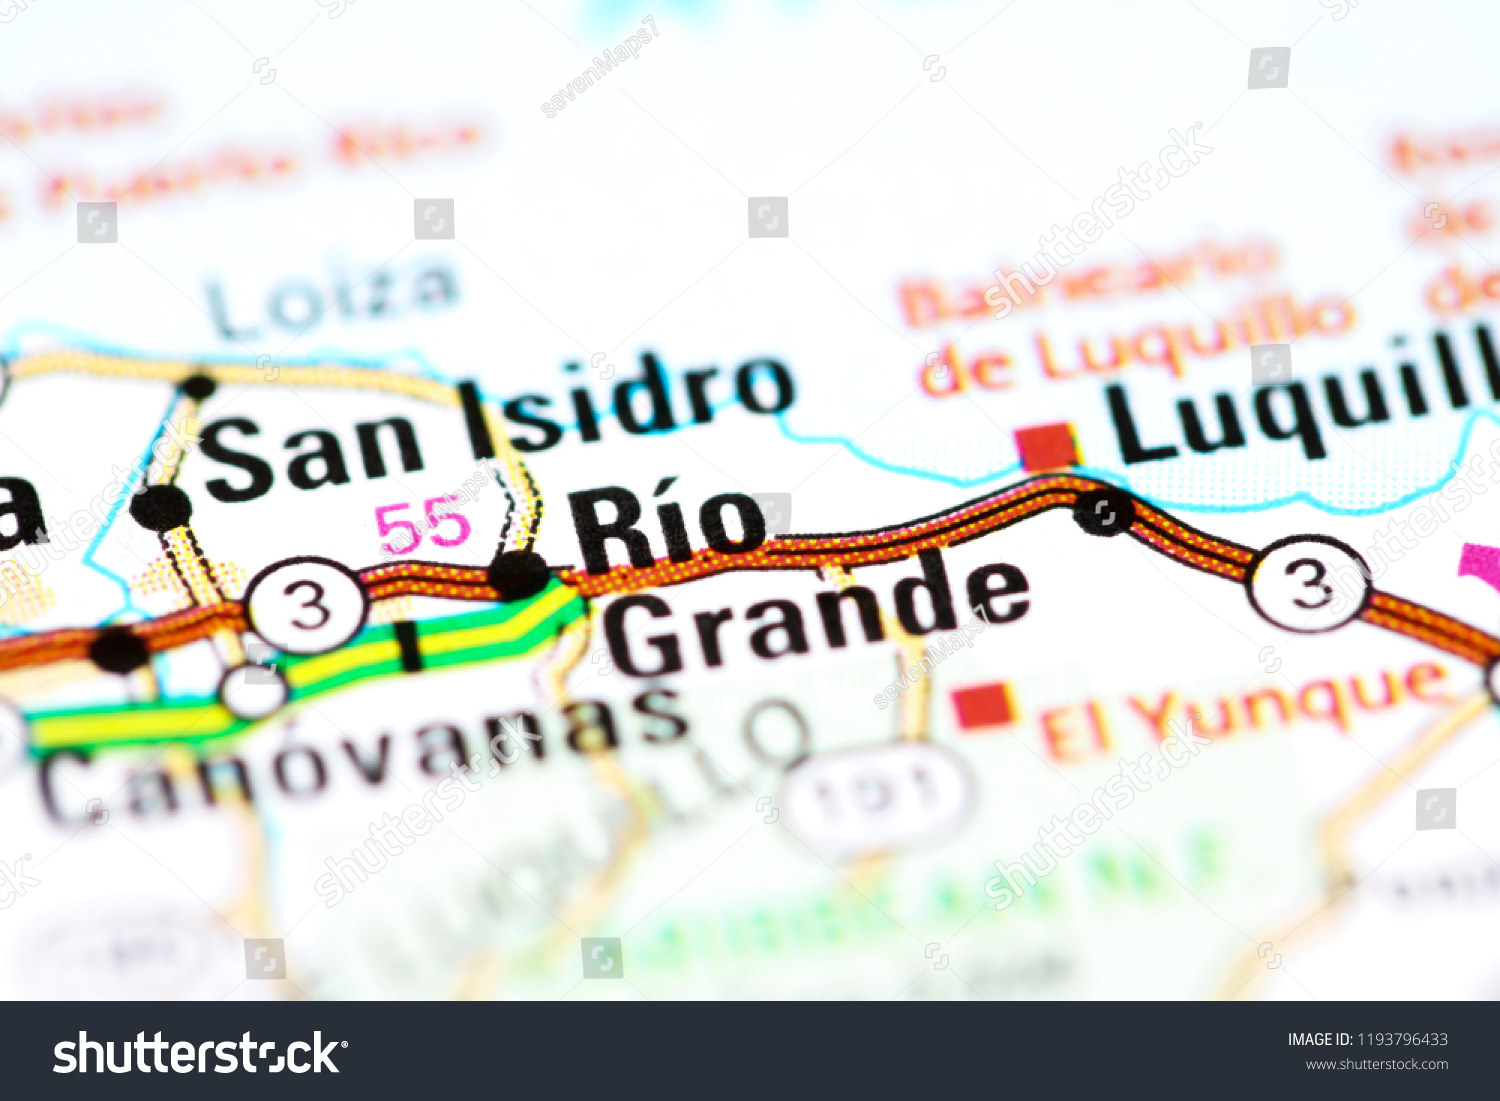 Rio Grande Puerto Rico On Map Stock Photo Edit Now